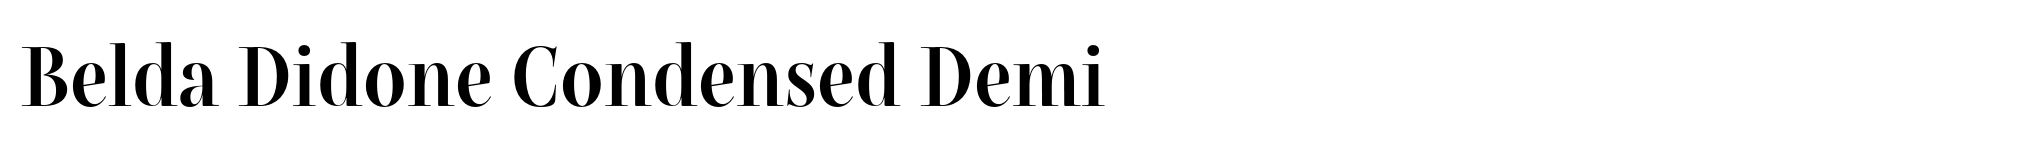 Belda Didone Condensed Demi image